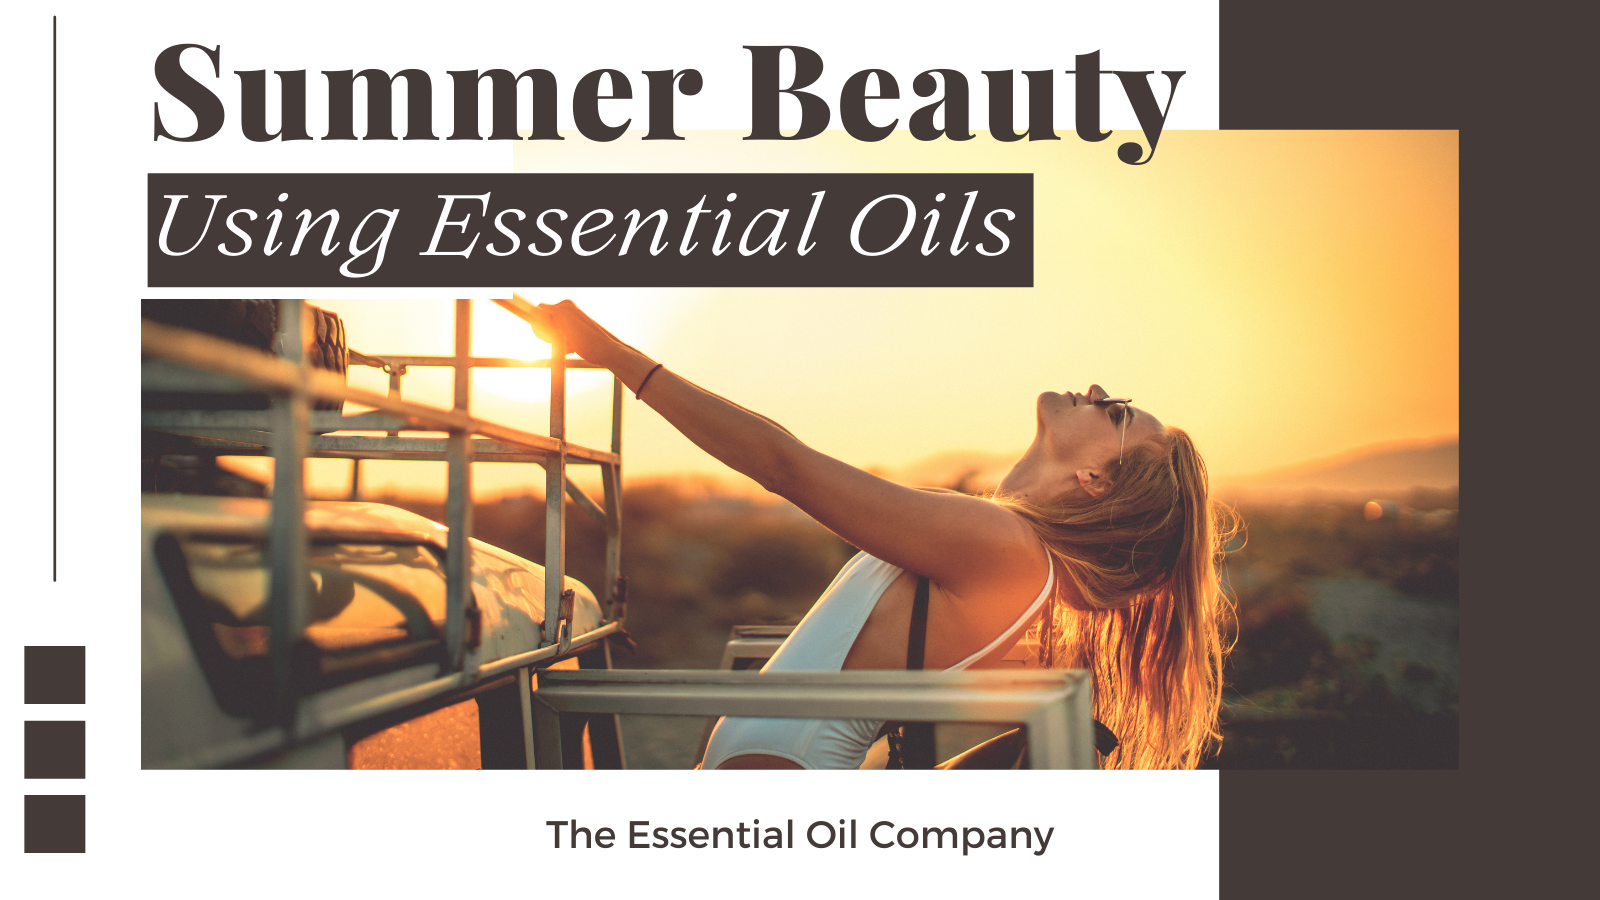 Summer Beauty using essential oils